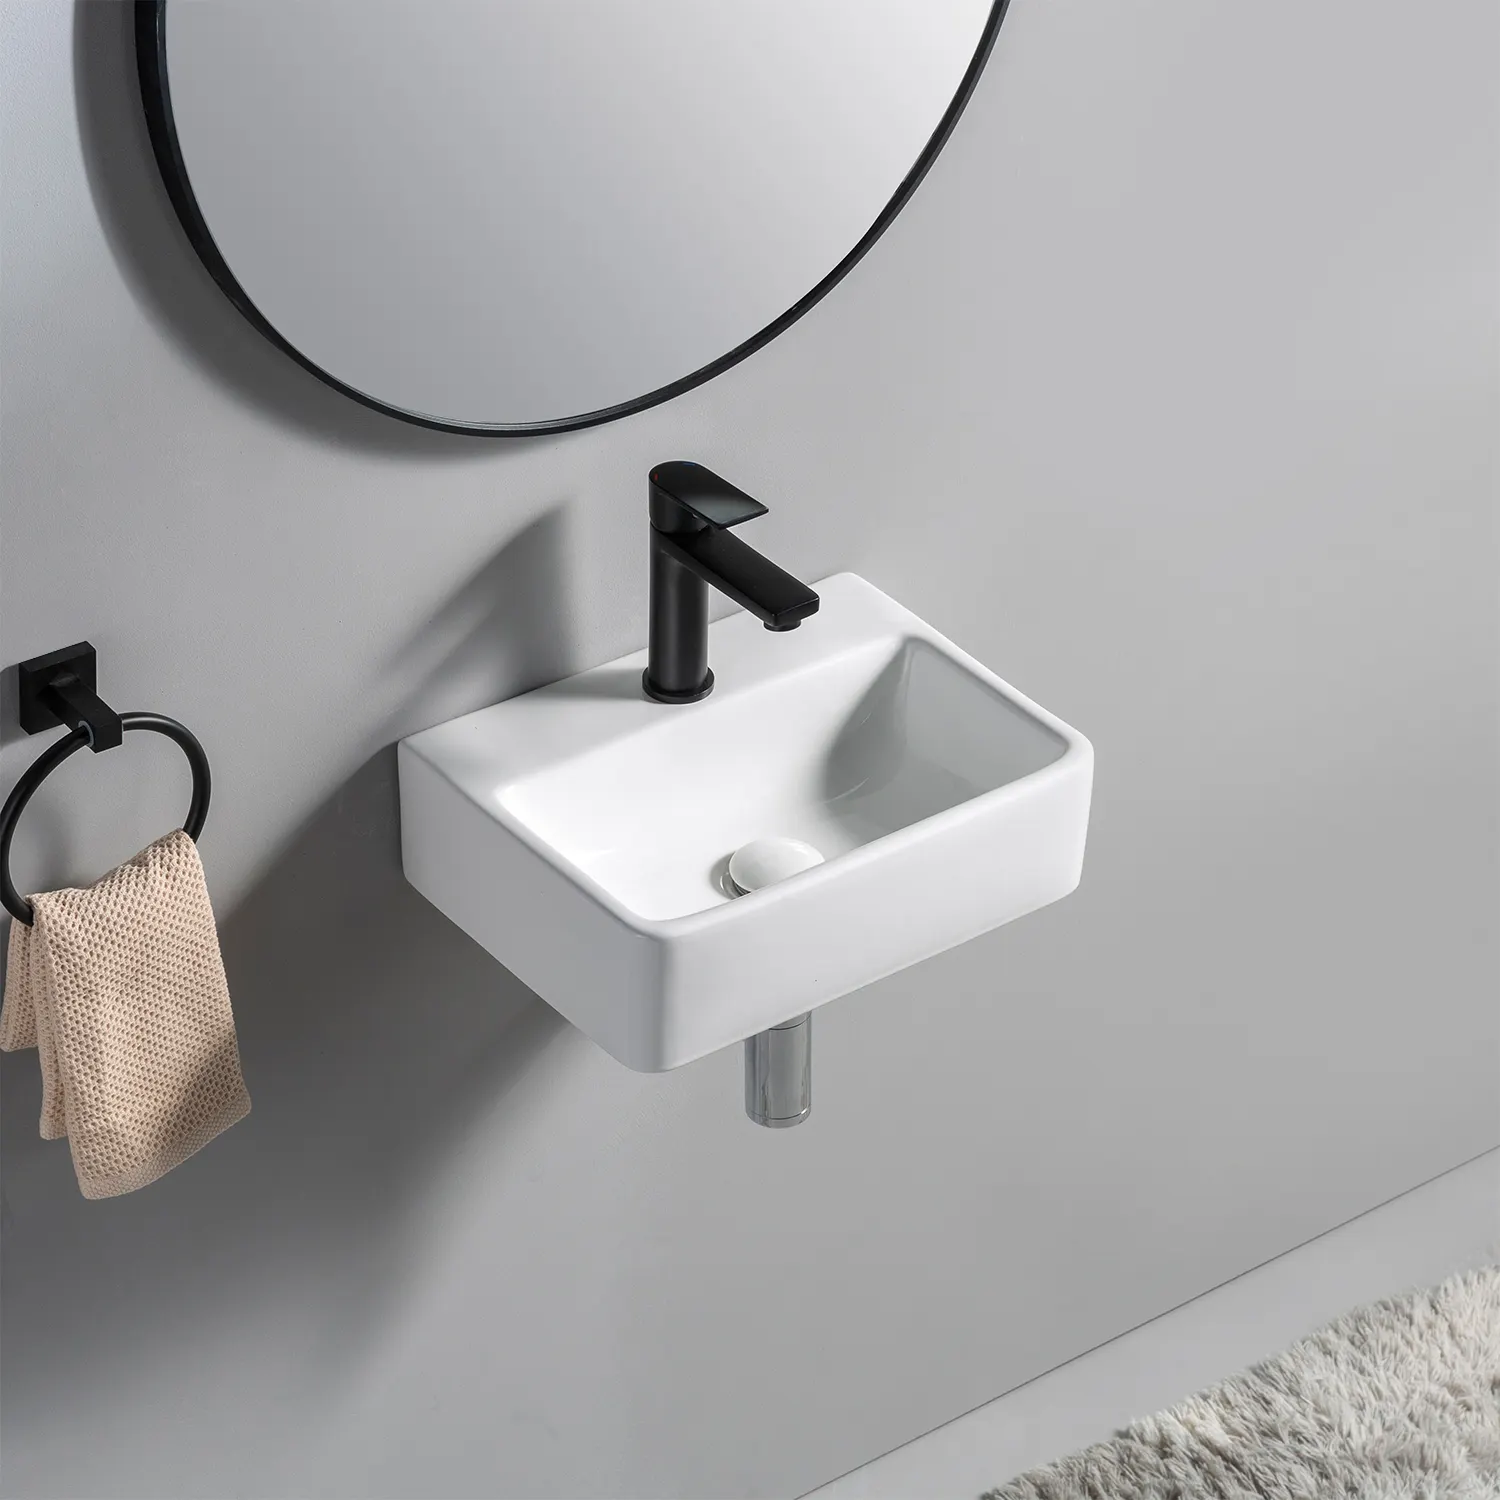 Modern Rectangular Small Size Hand Washing Basin Ceramic Single Hole Wall Hung Mounted Bathroom Basin Sink